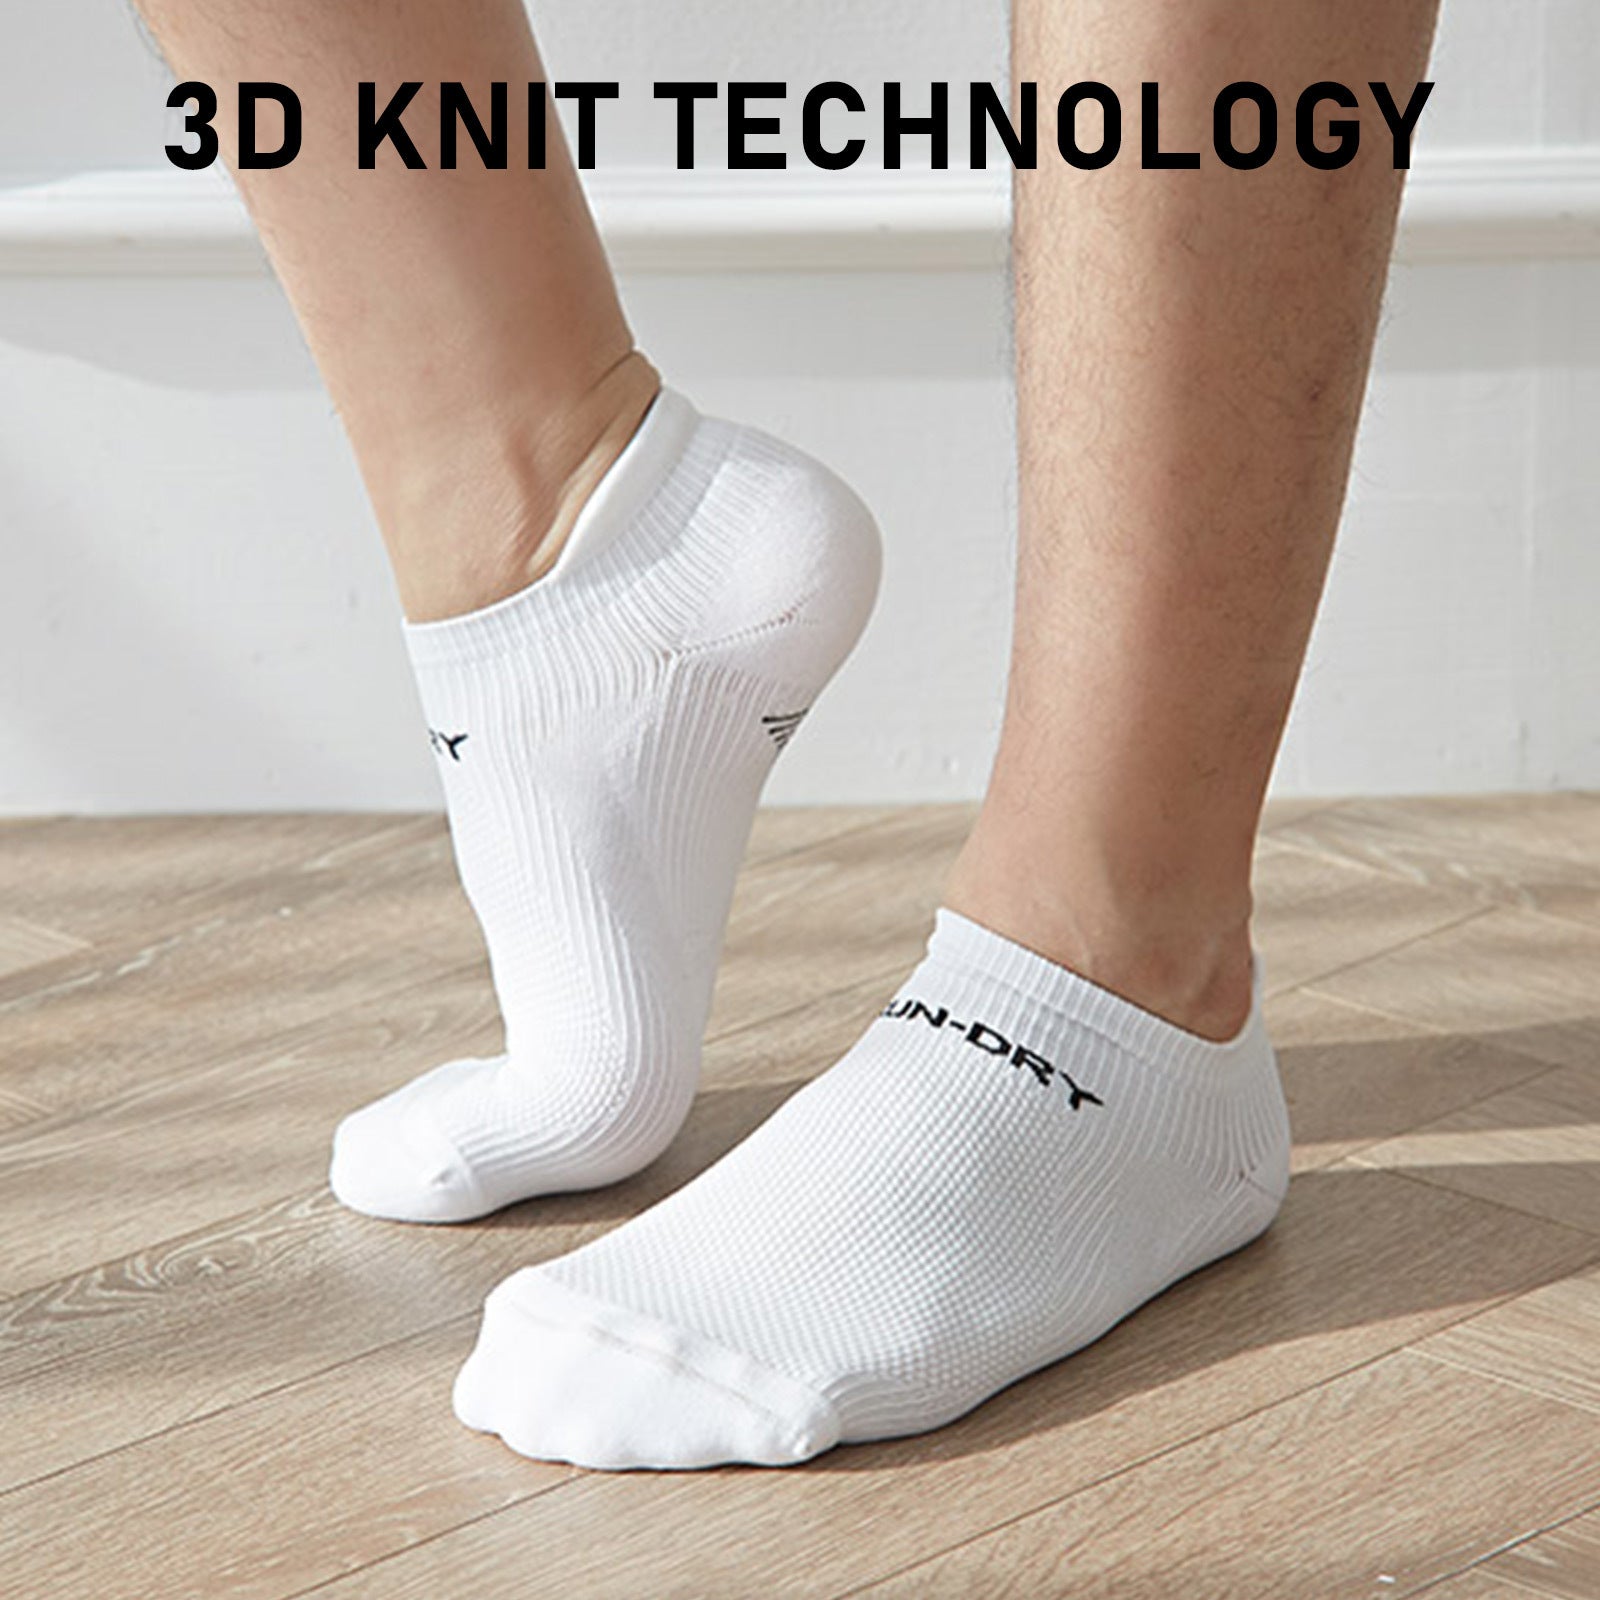 4X Rexy Seamless Sport Sneakers Socks Large Non-Slip Heel Tab WHITE